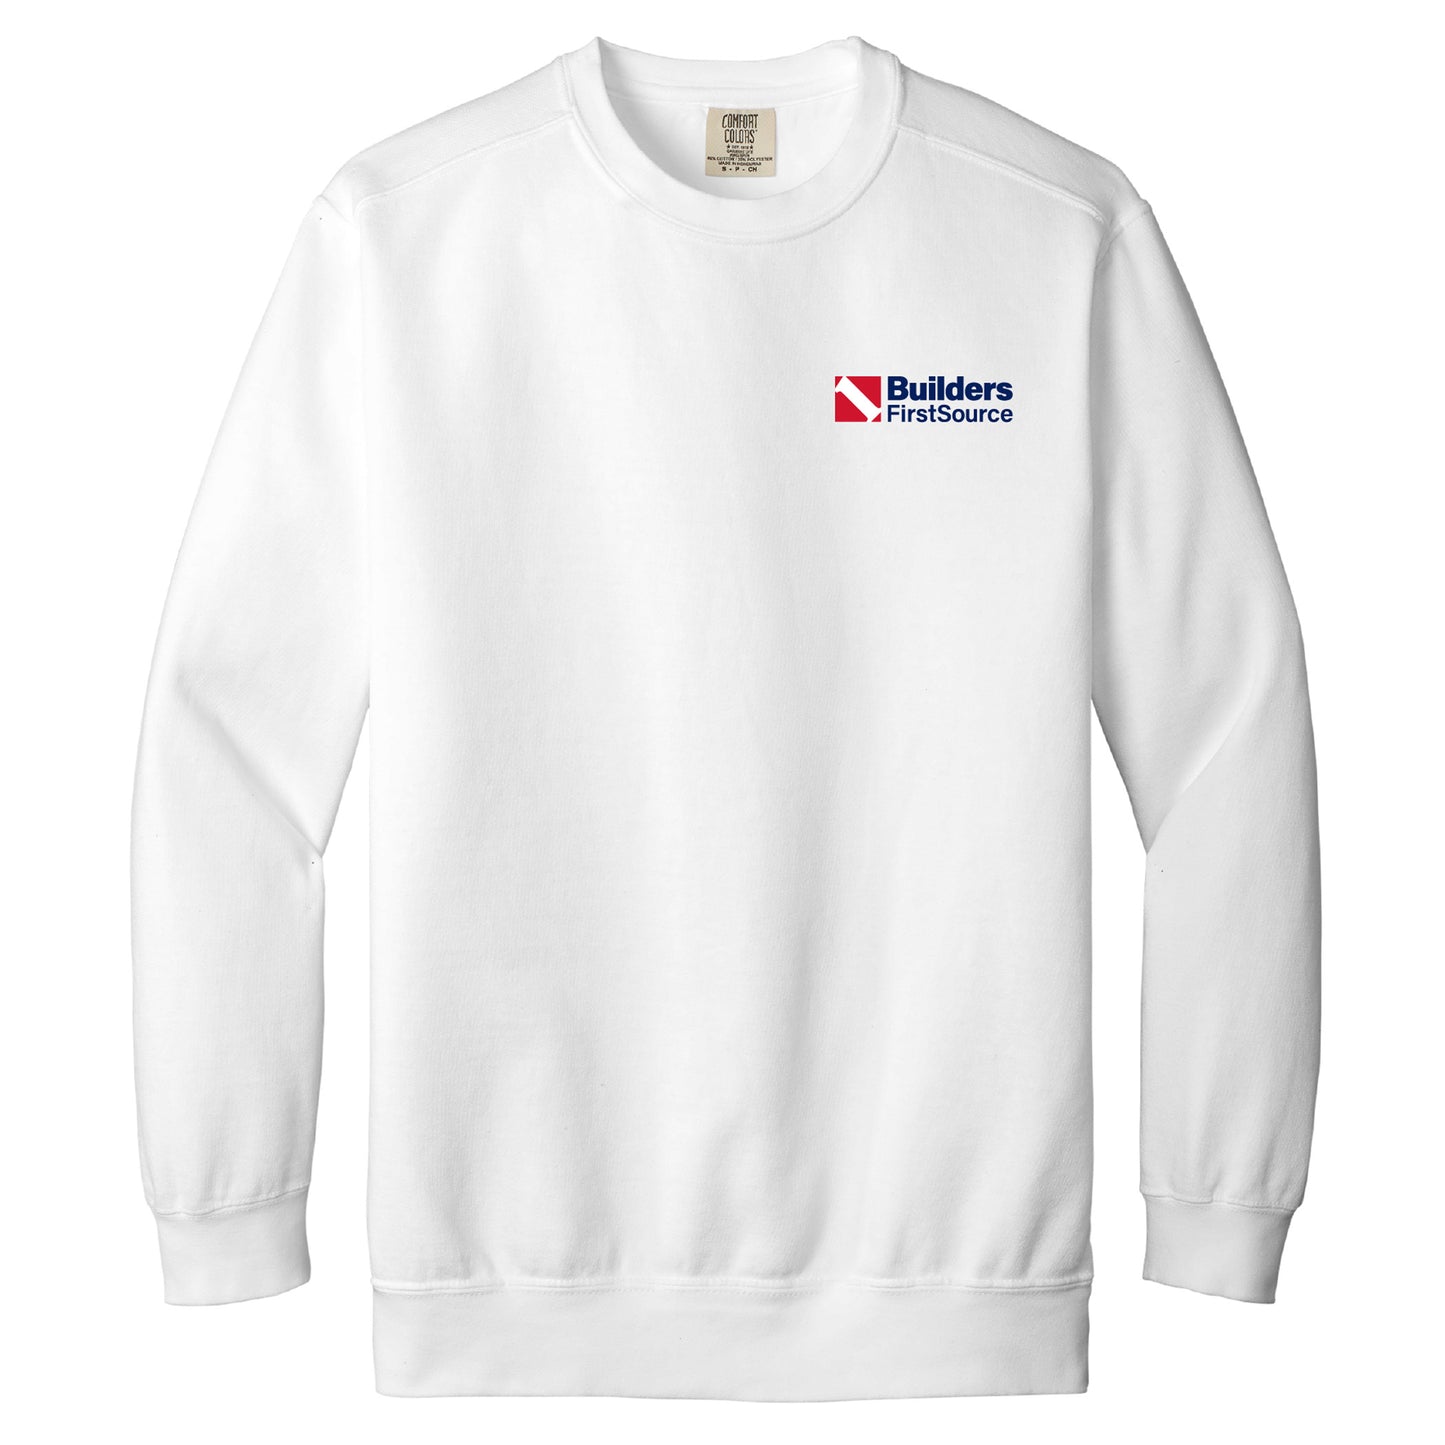 Comfort Colors Ring Spun Crewneck Sweatshirt